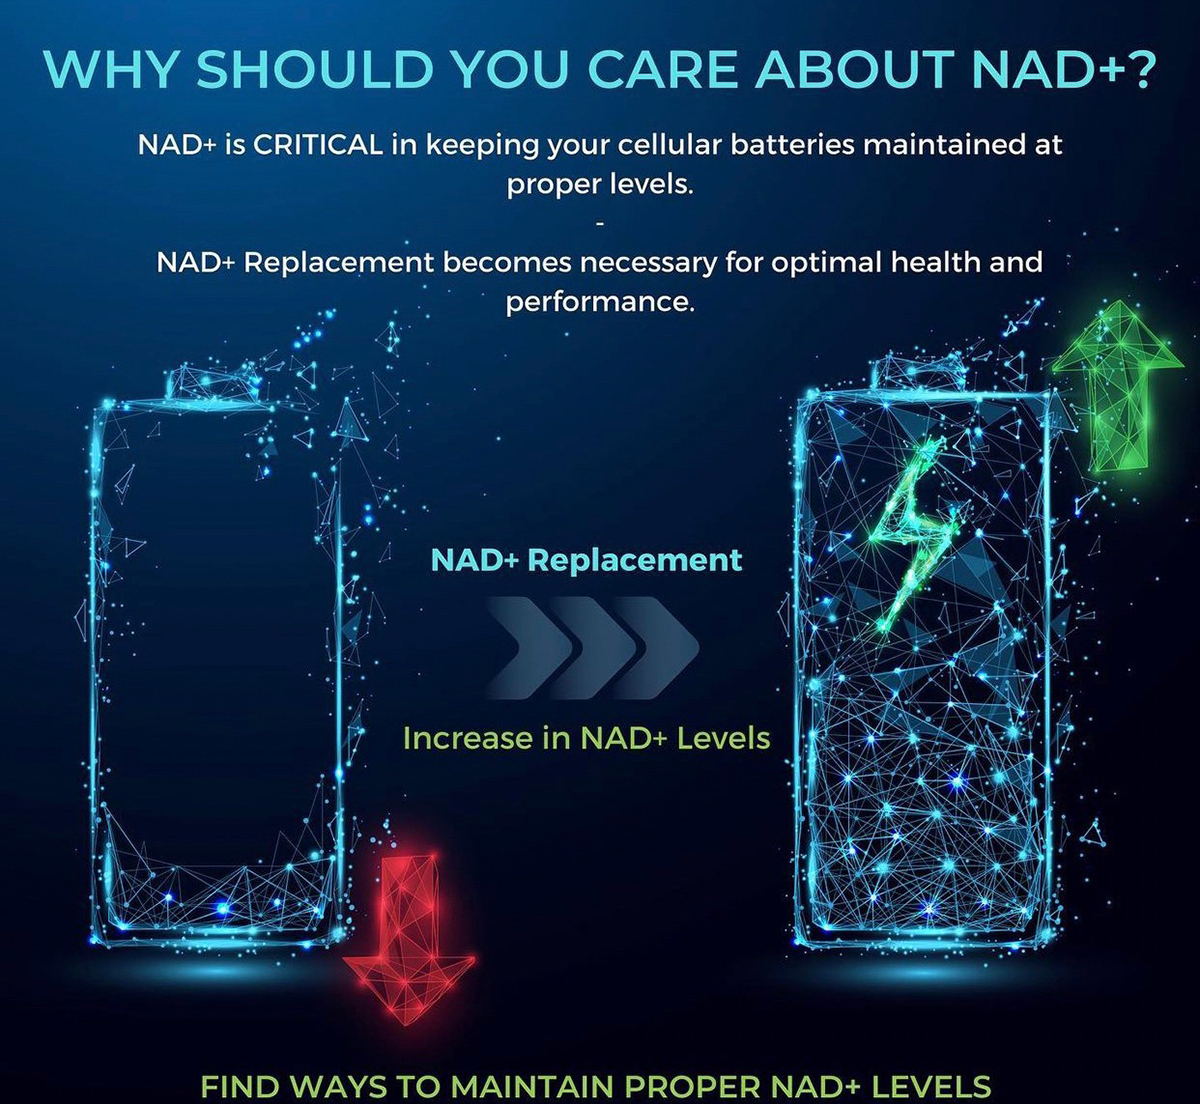 NAD+ IV Therapy คืออะไร ช่วยดูแลสุขภาพได้อย่างไร?